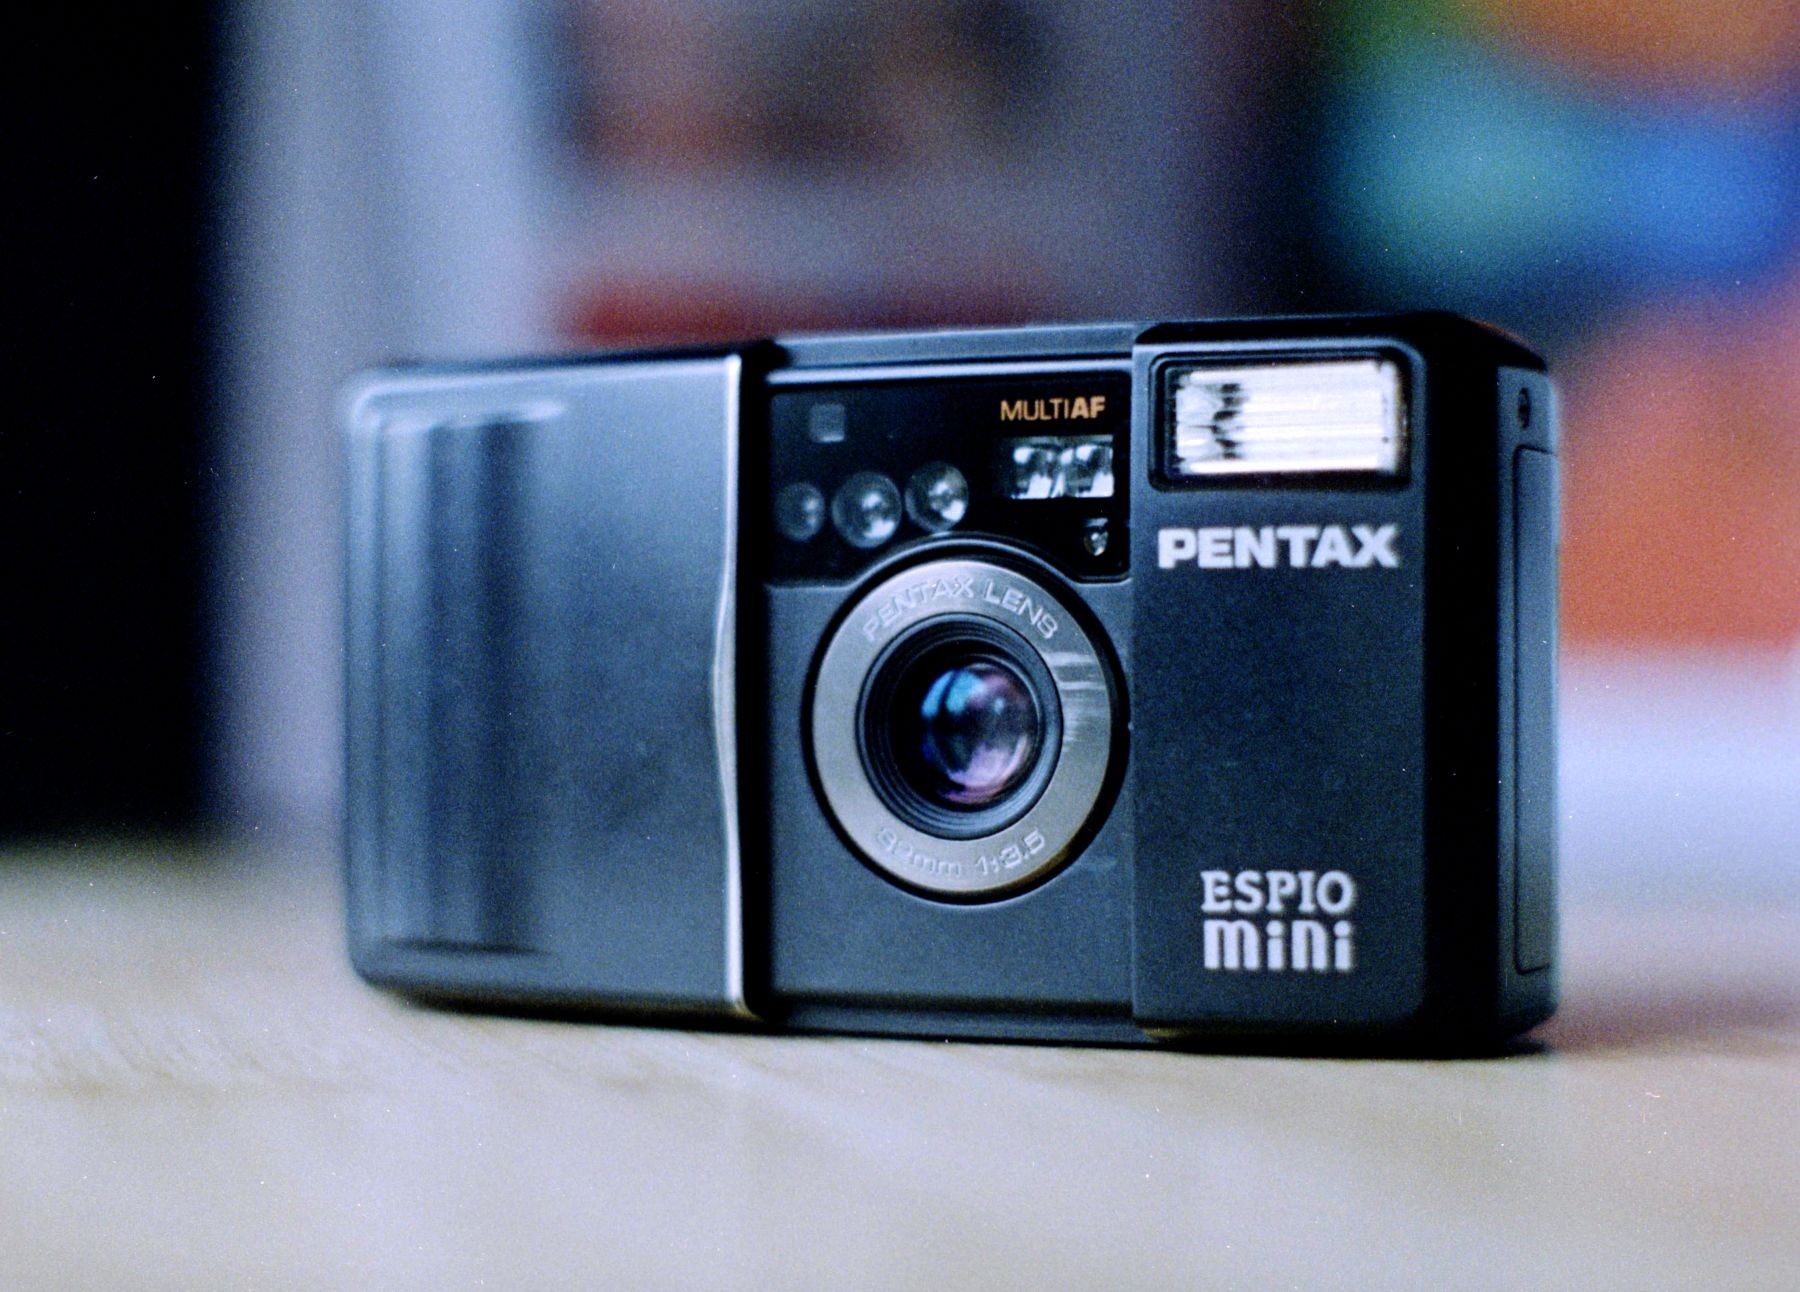 A small black point-and-shoot camera, Pentax Espio Mini